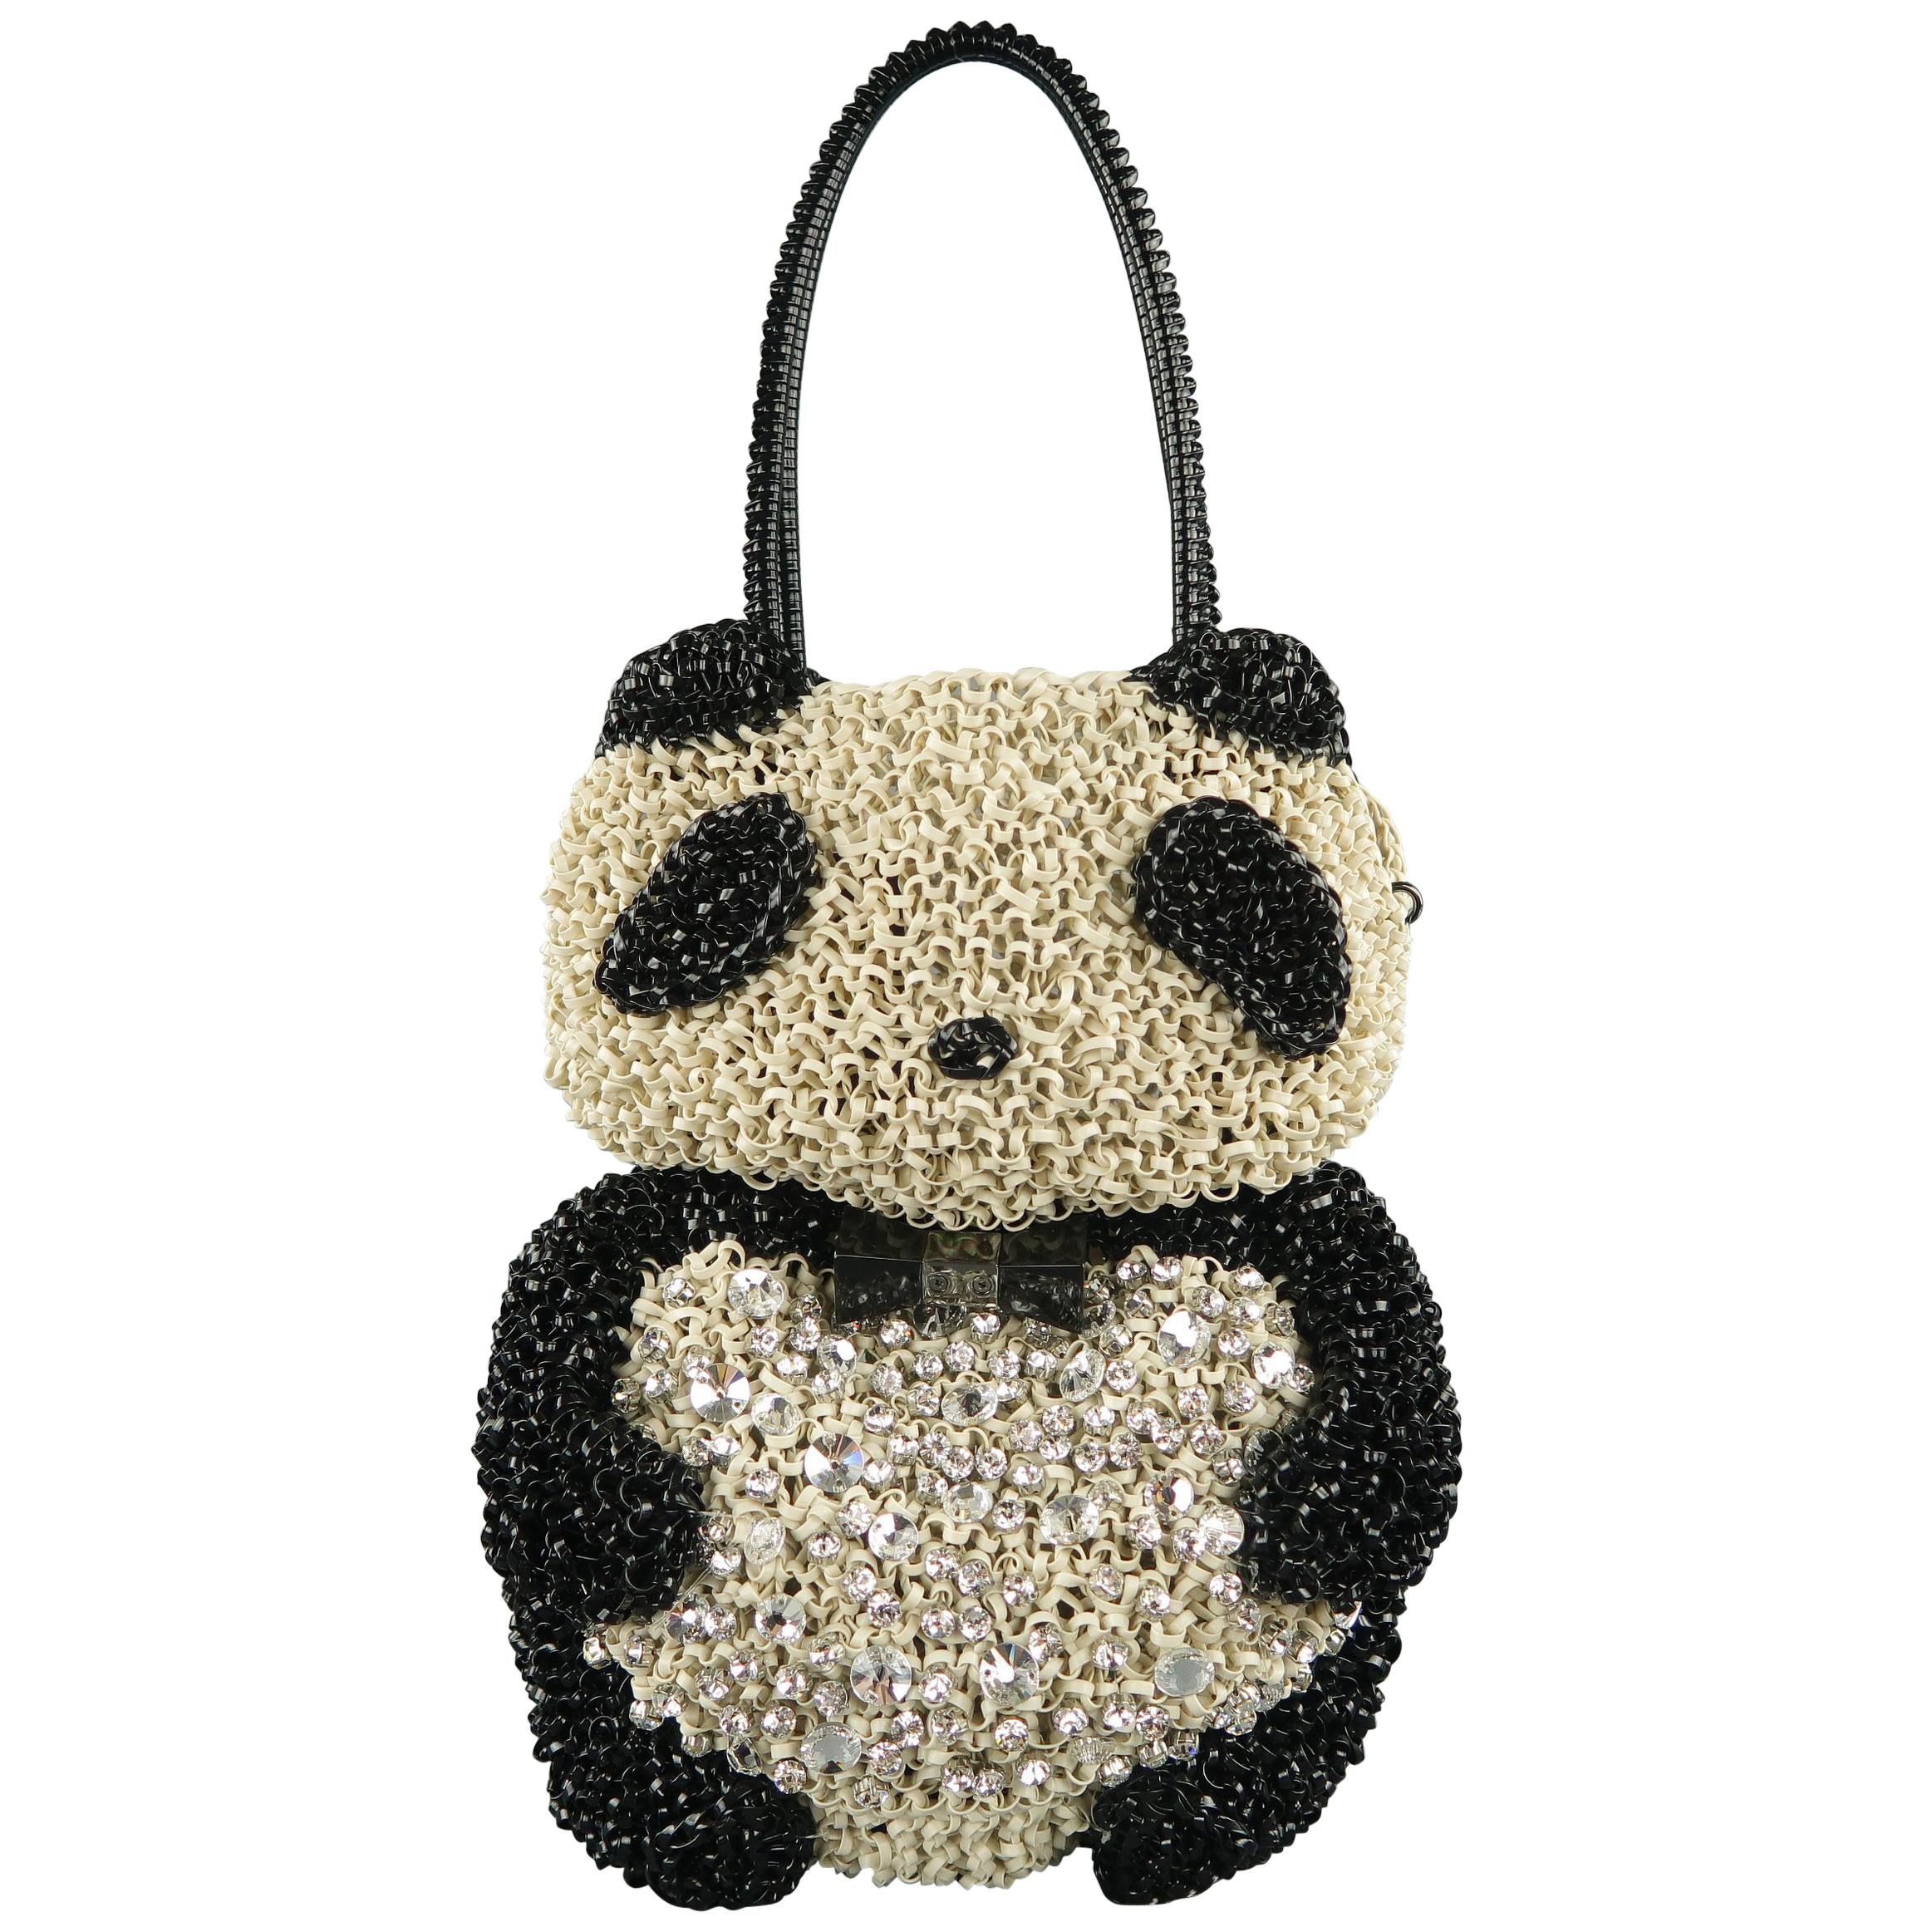 ANTEPRIMA Crochet Swarovski Crystal 3D PANDA WIREBAG Handbag